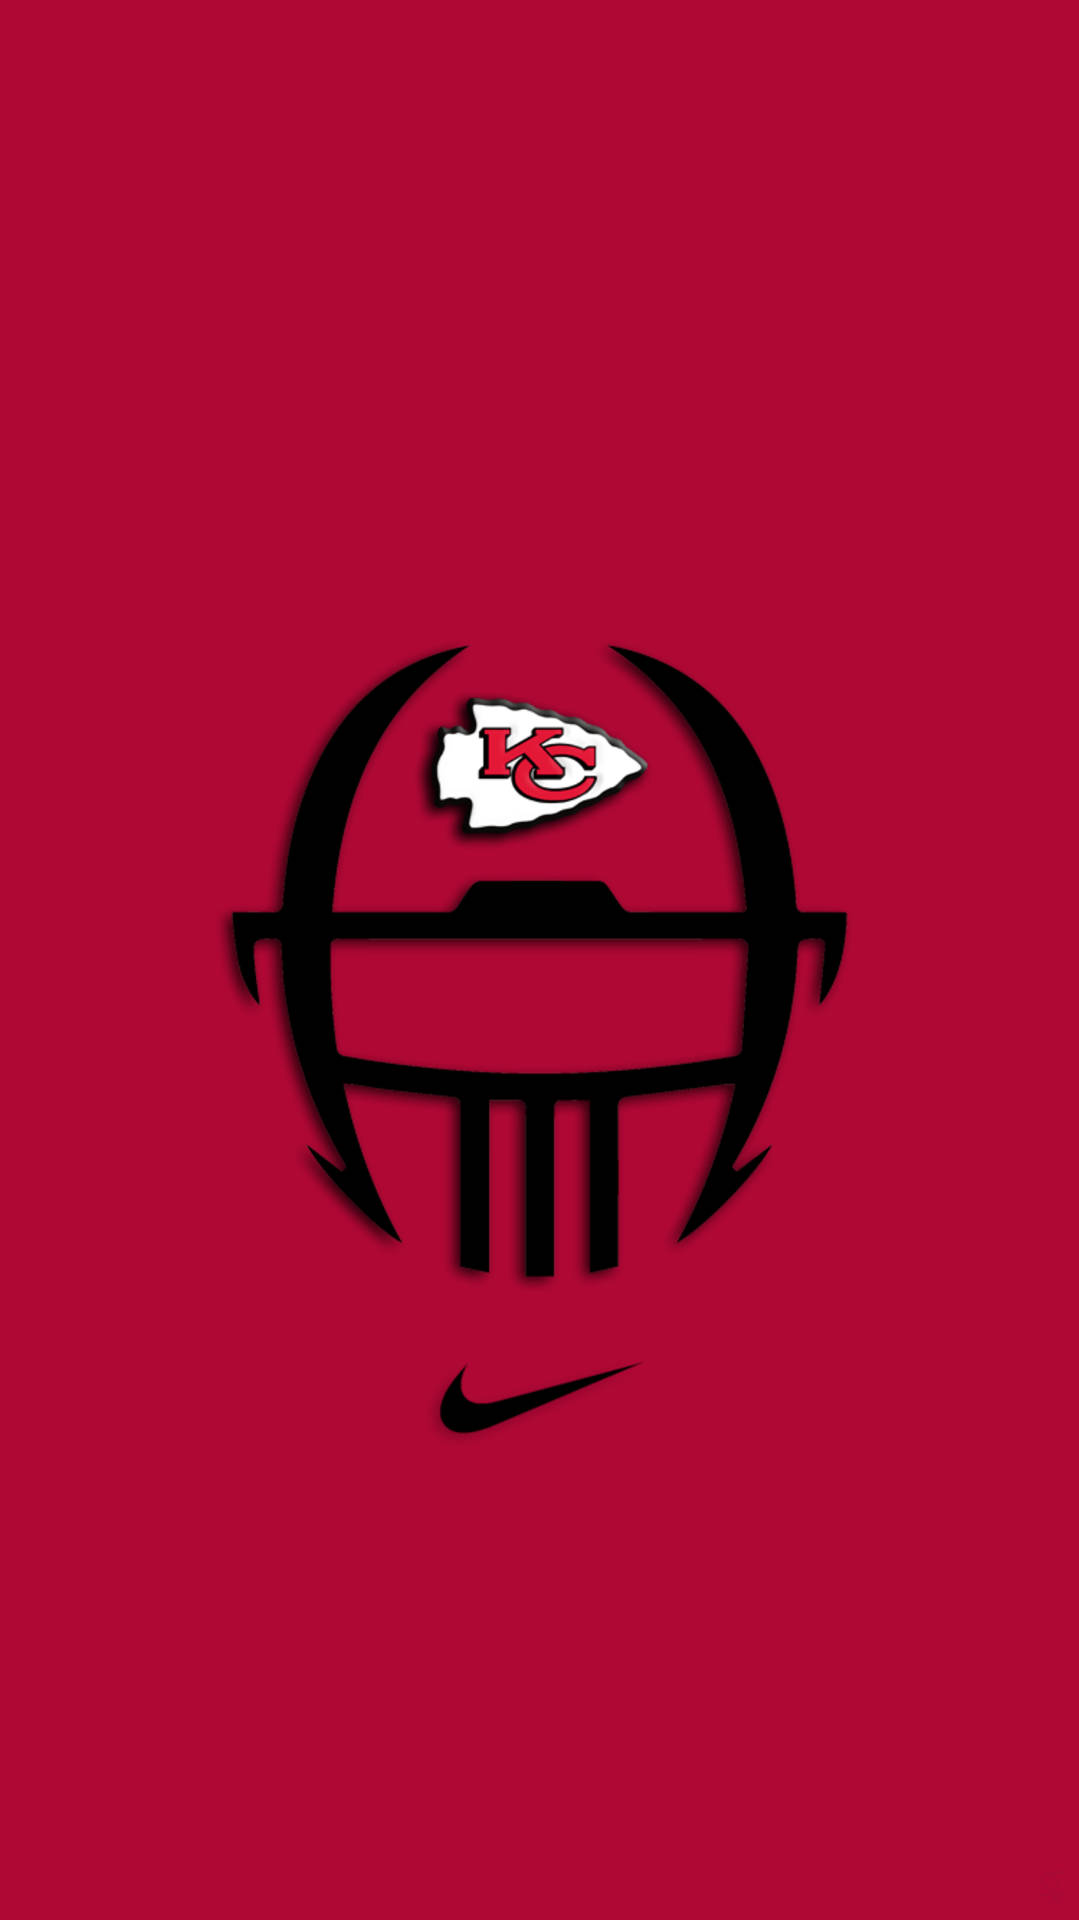 Red Helmet Kc Chiefs Phone Background